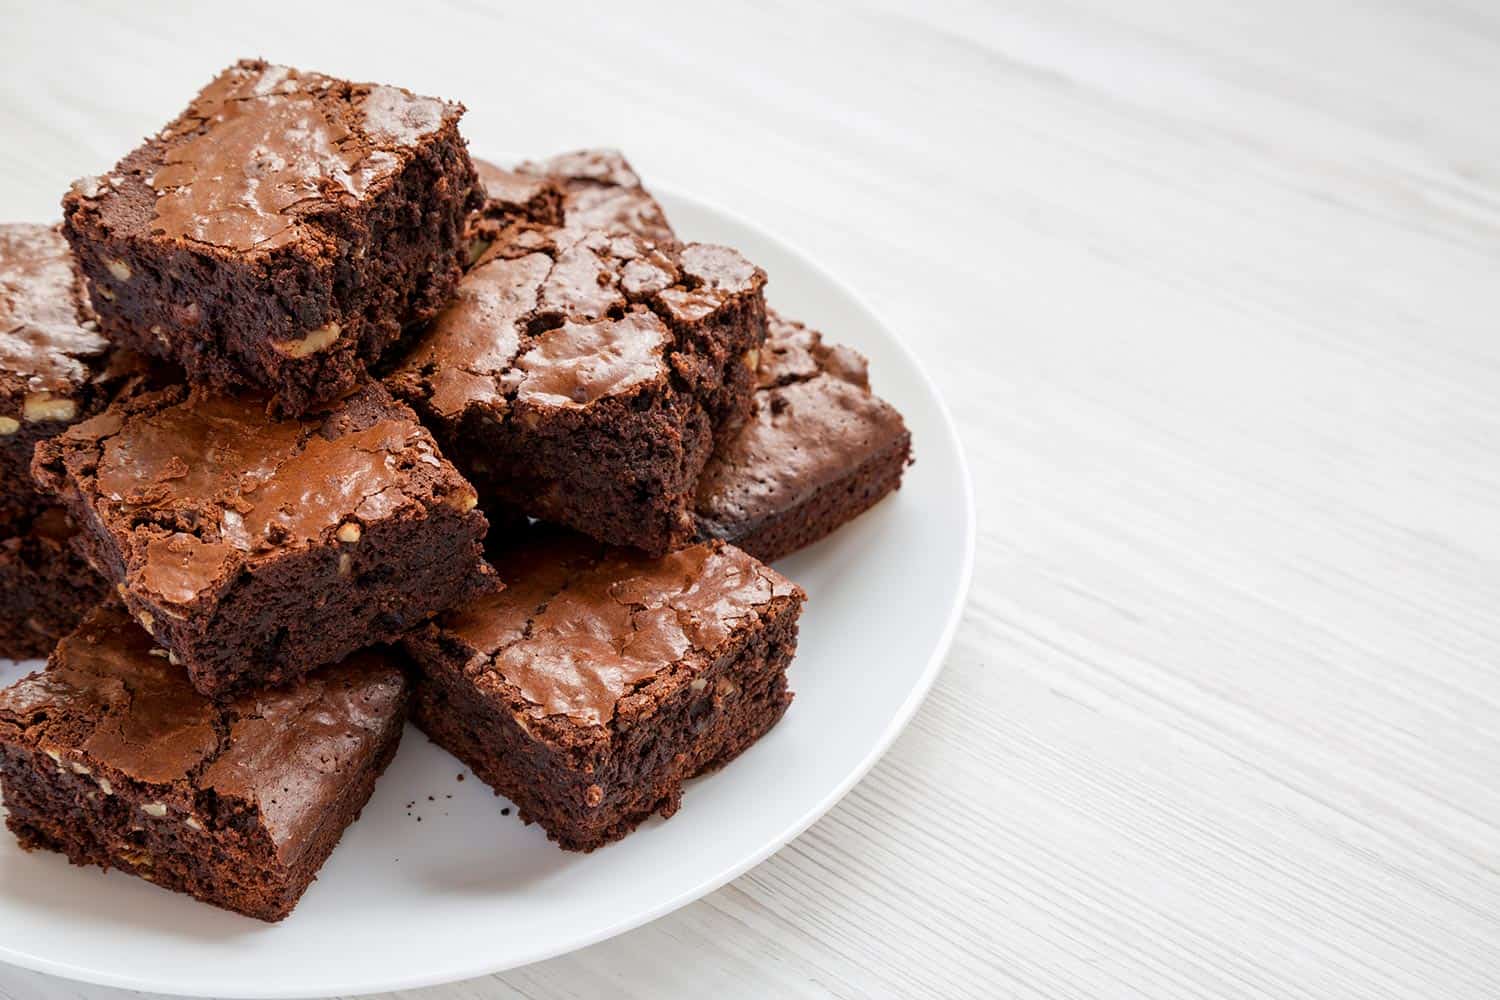 Homemade chocolate brownies on a plate